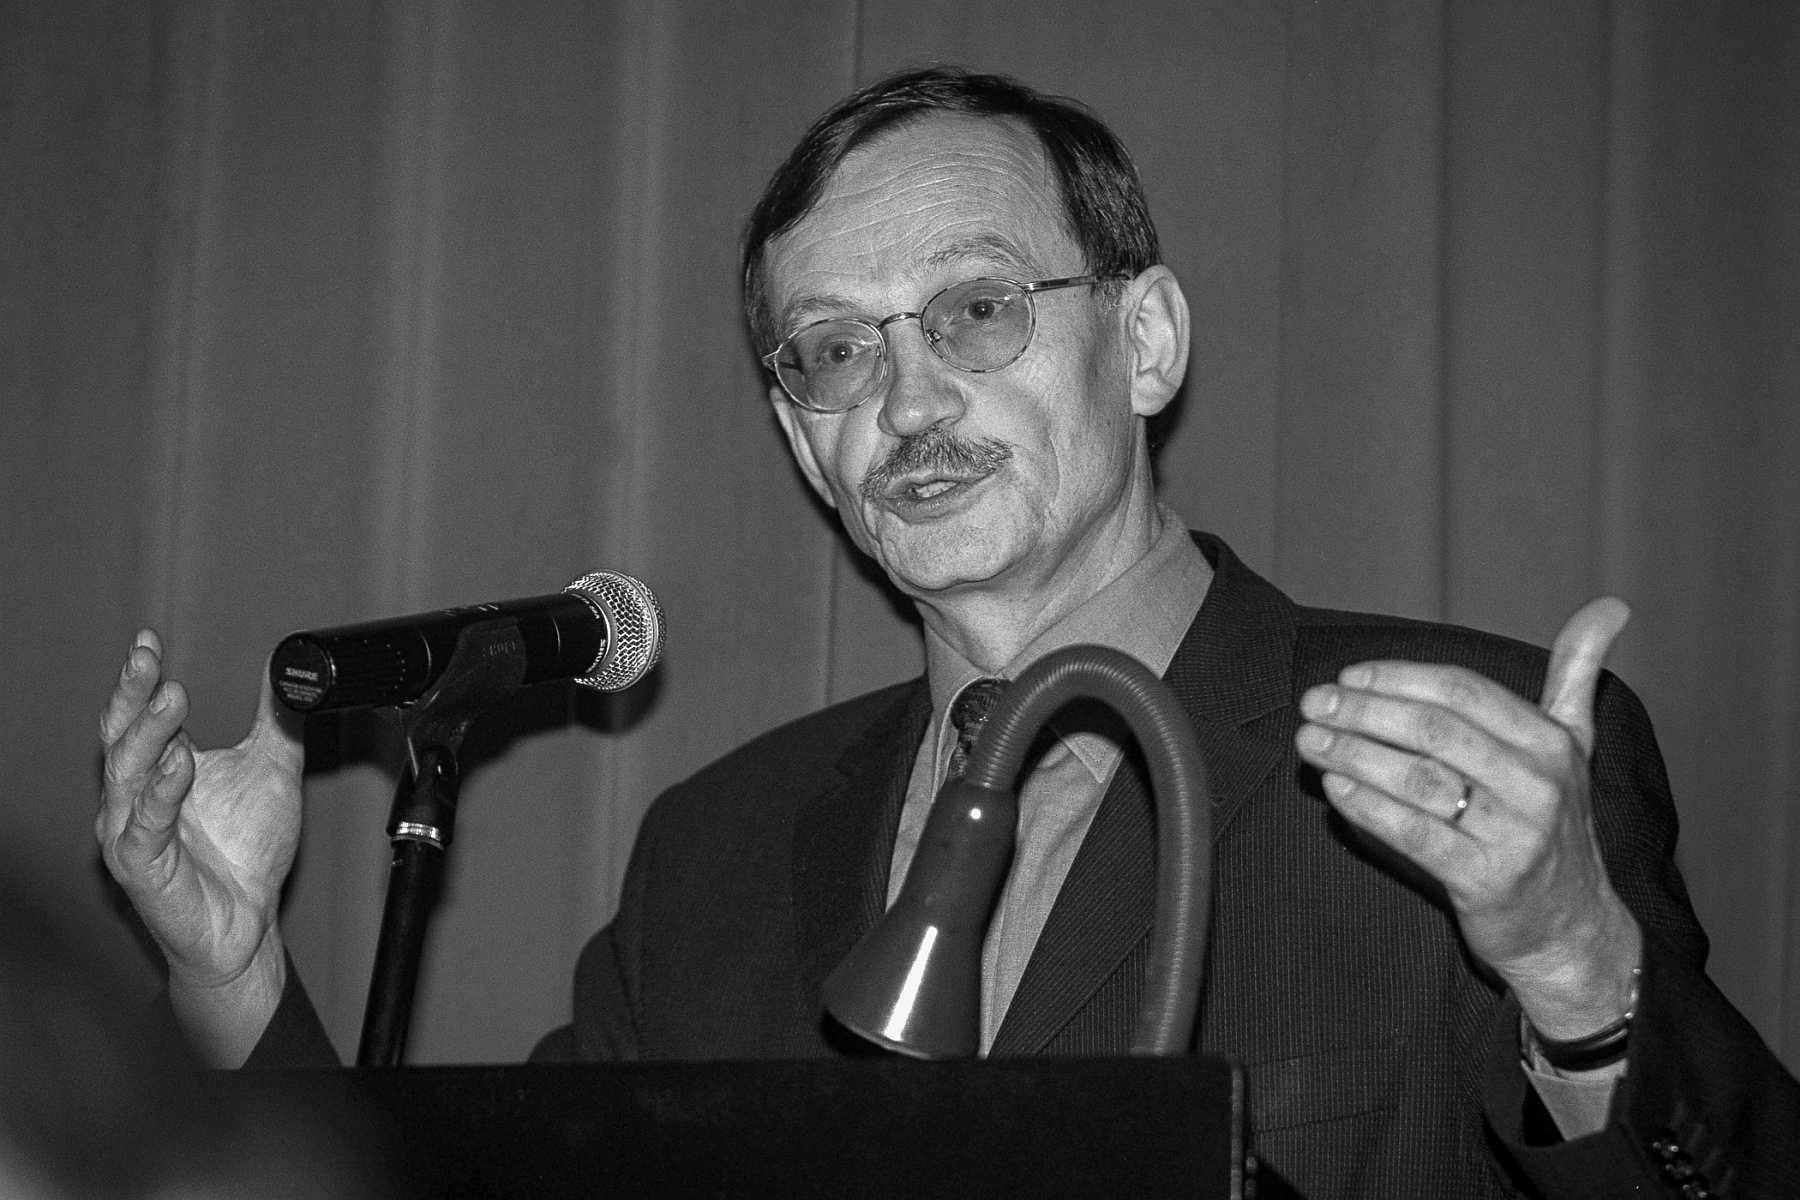 Professor Karl Prümm